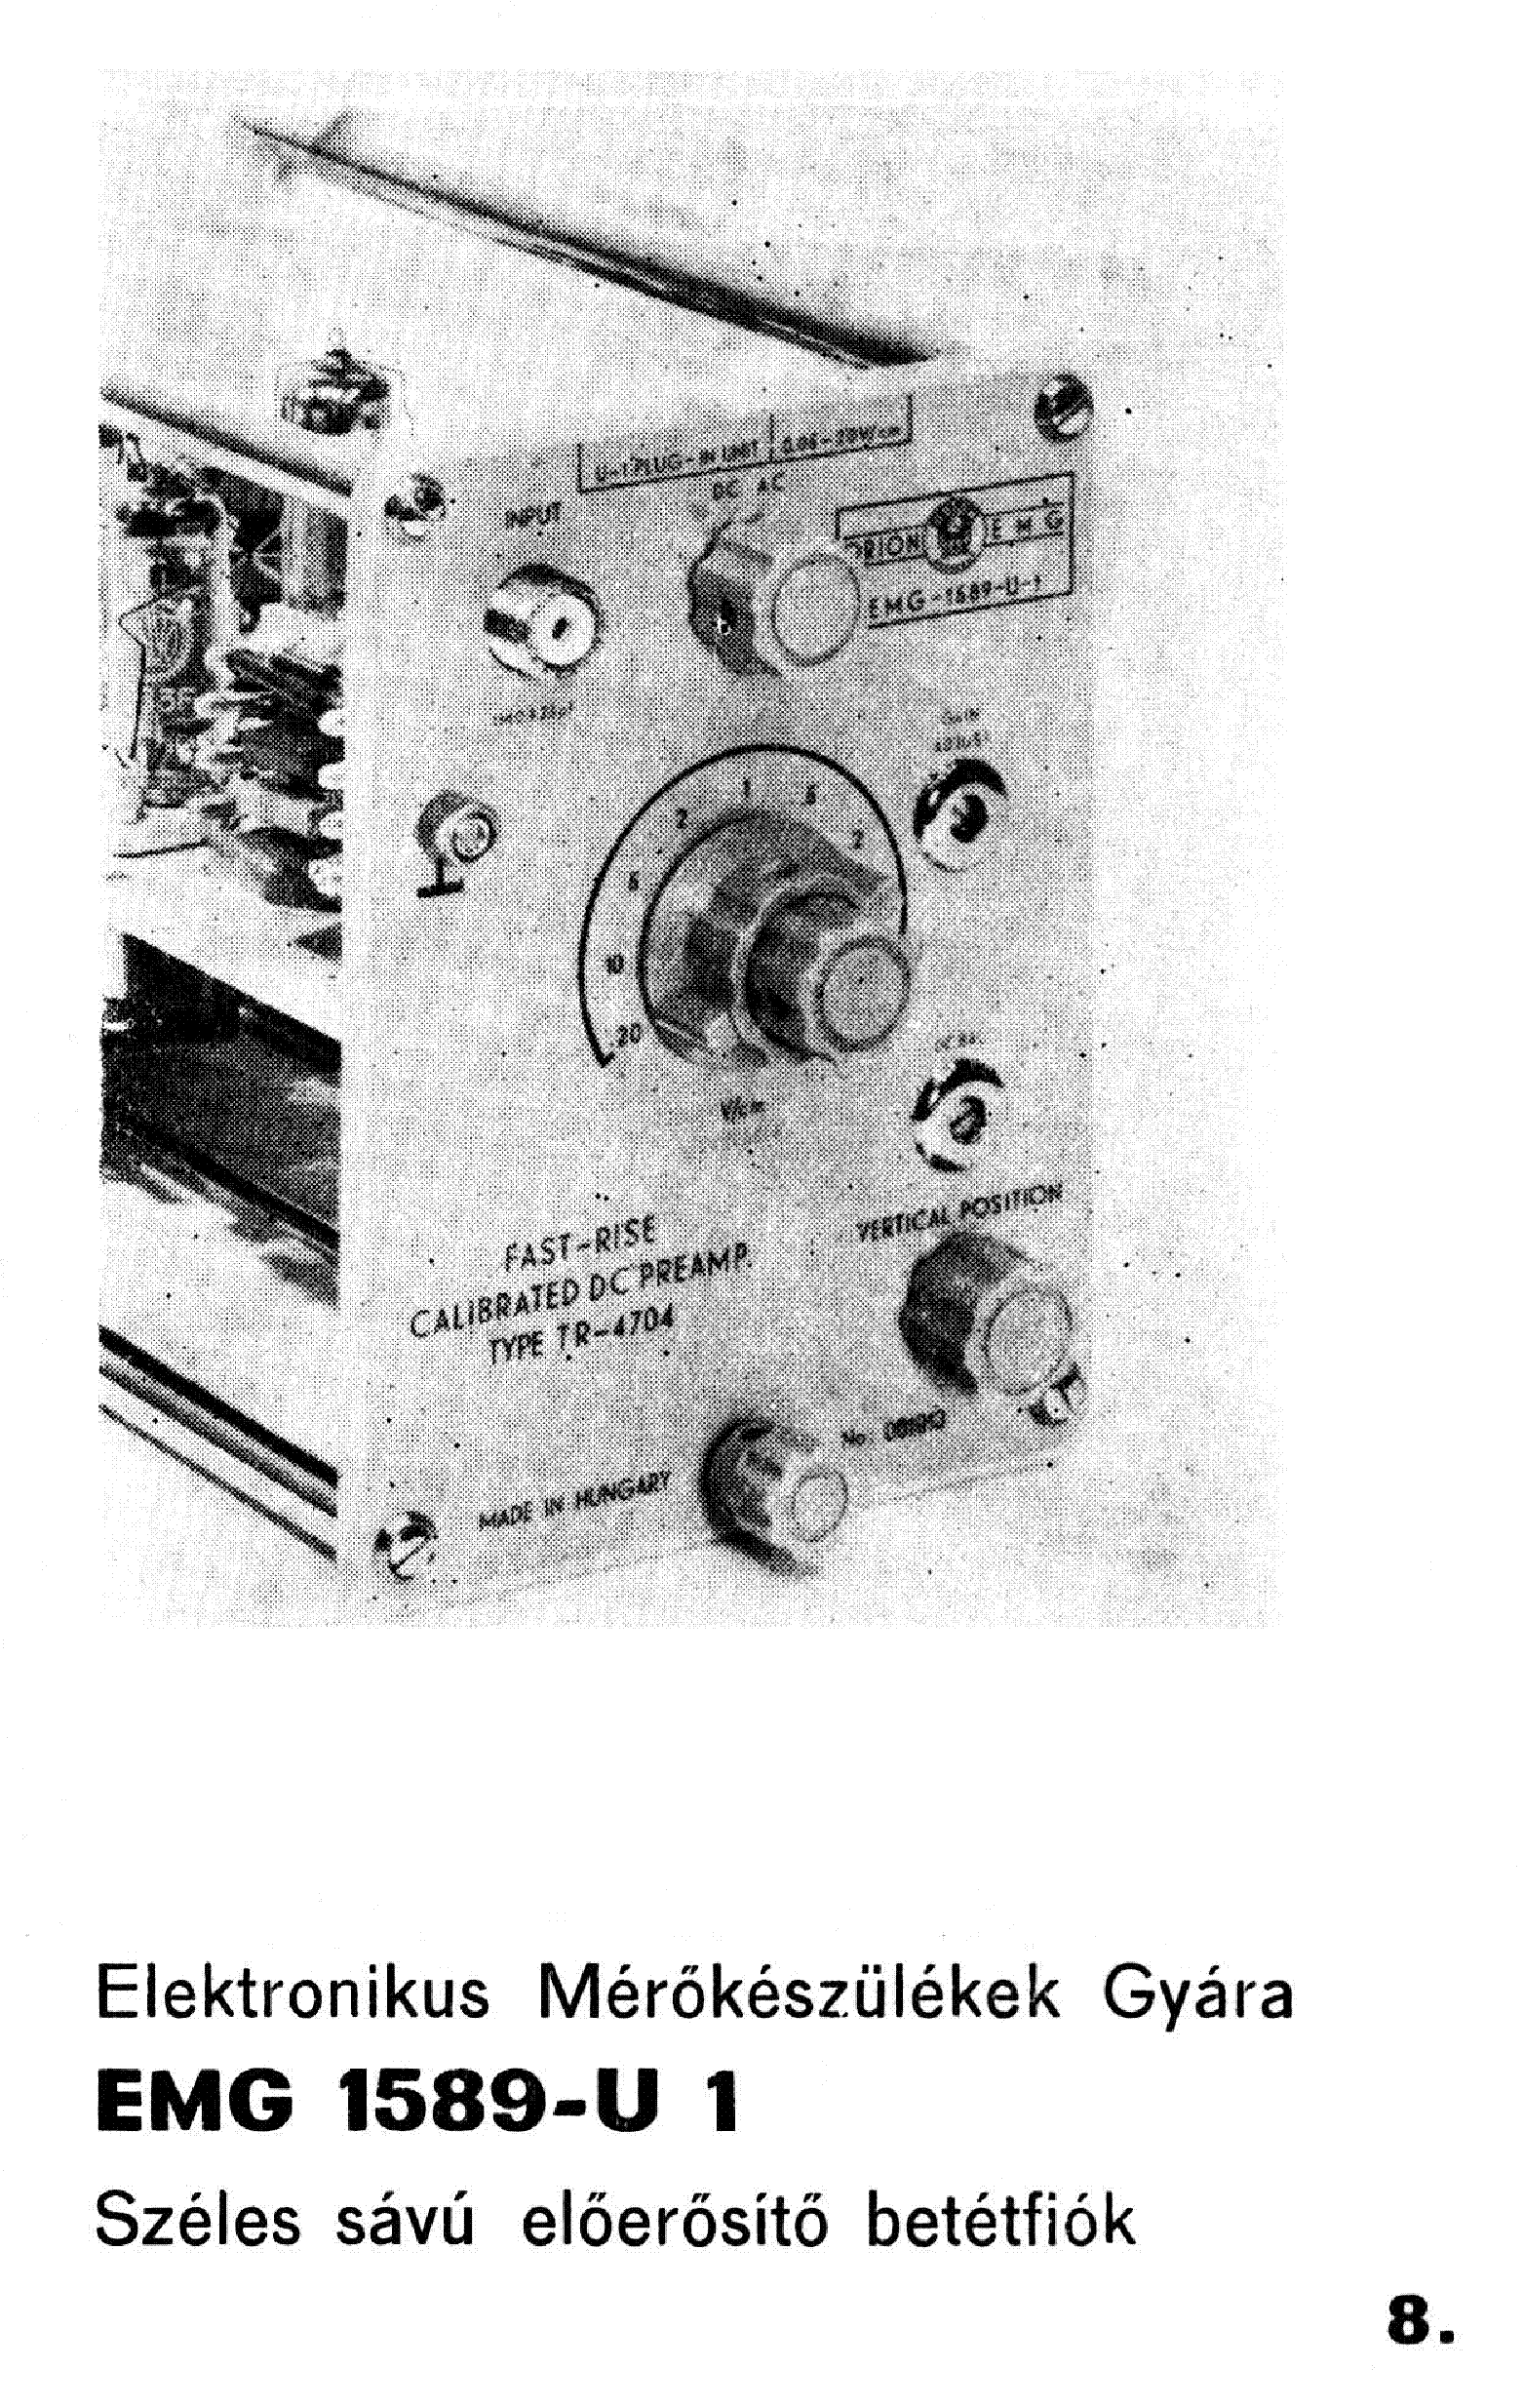 EMG 1589-U1 BETETFIOK service manual (1st page)